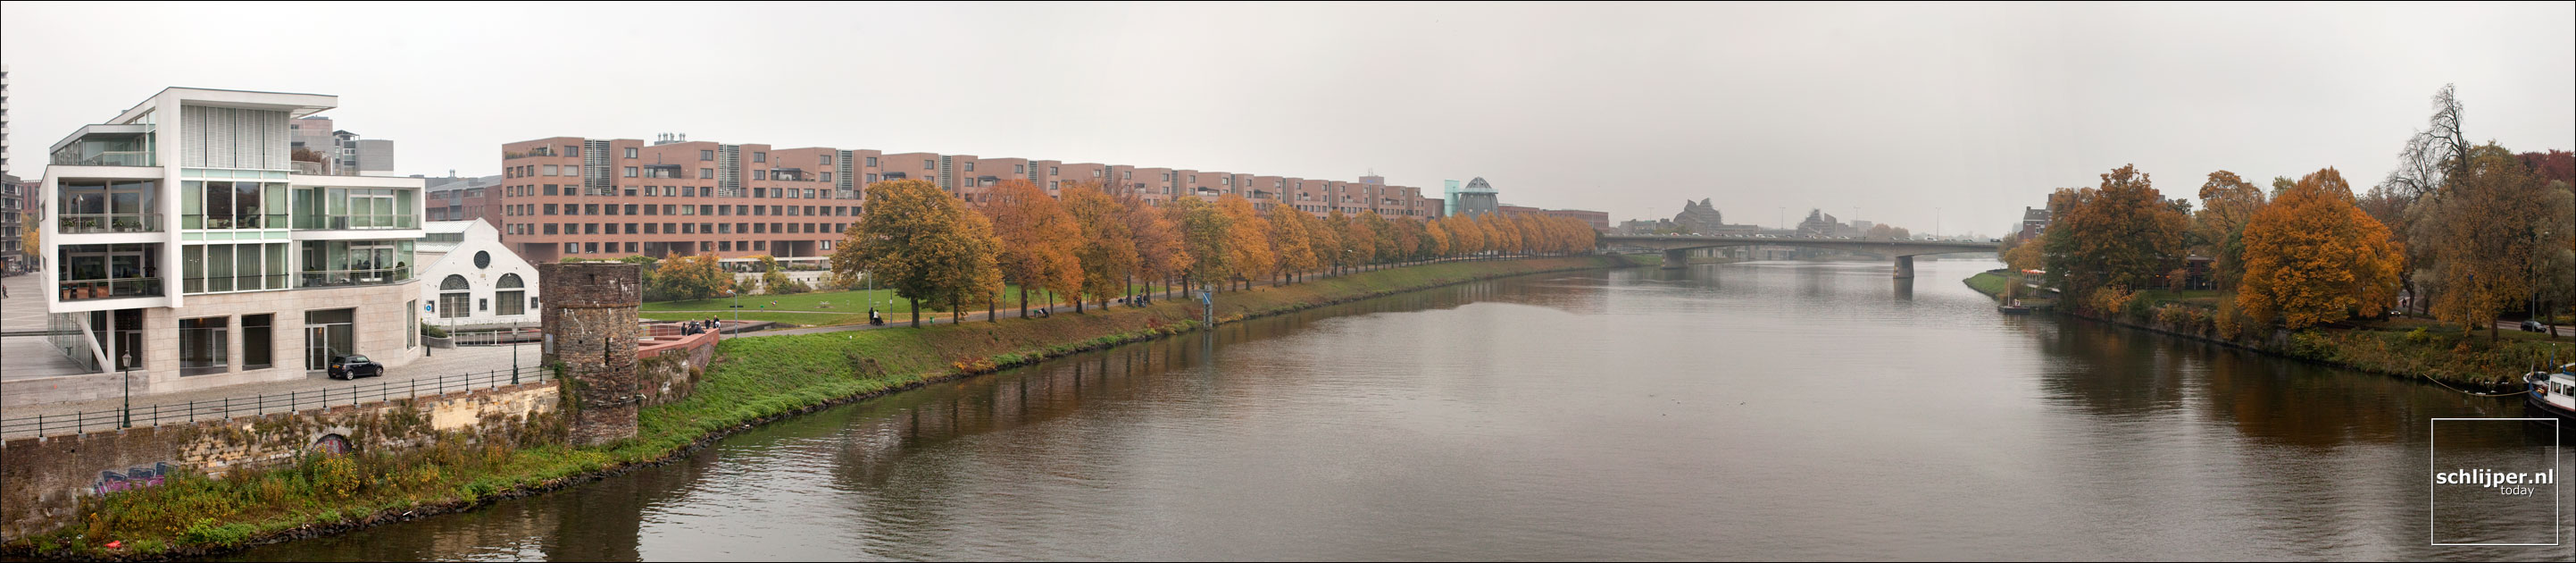 Nederland, Maastricht, 1 november 2010